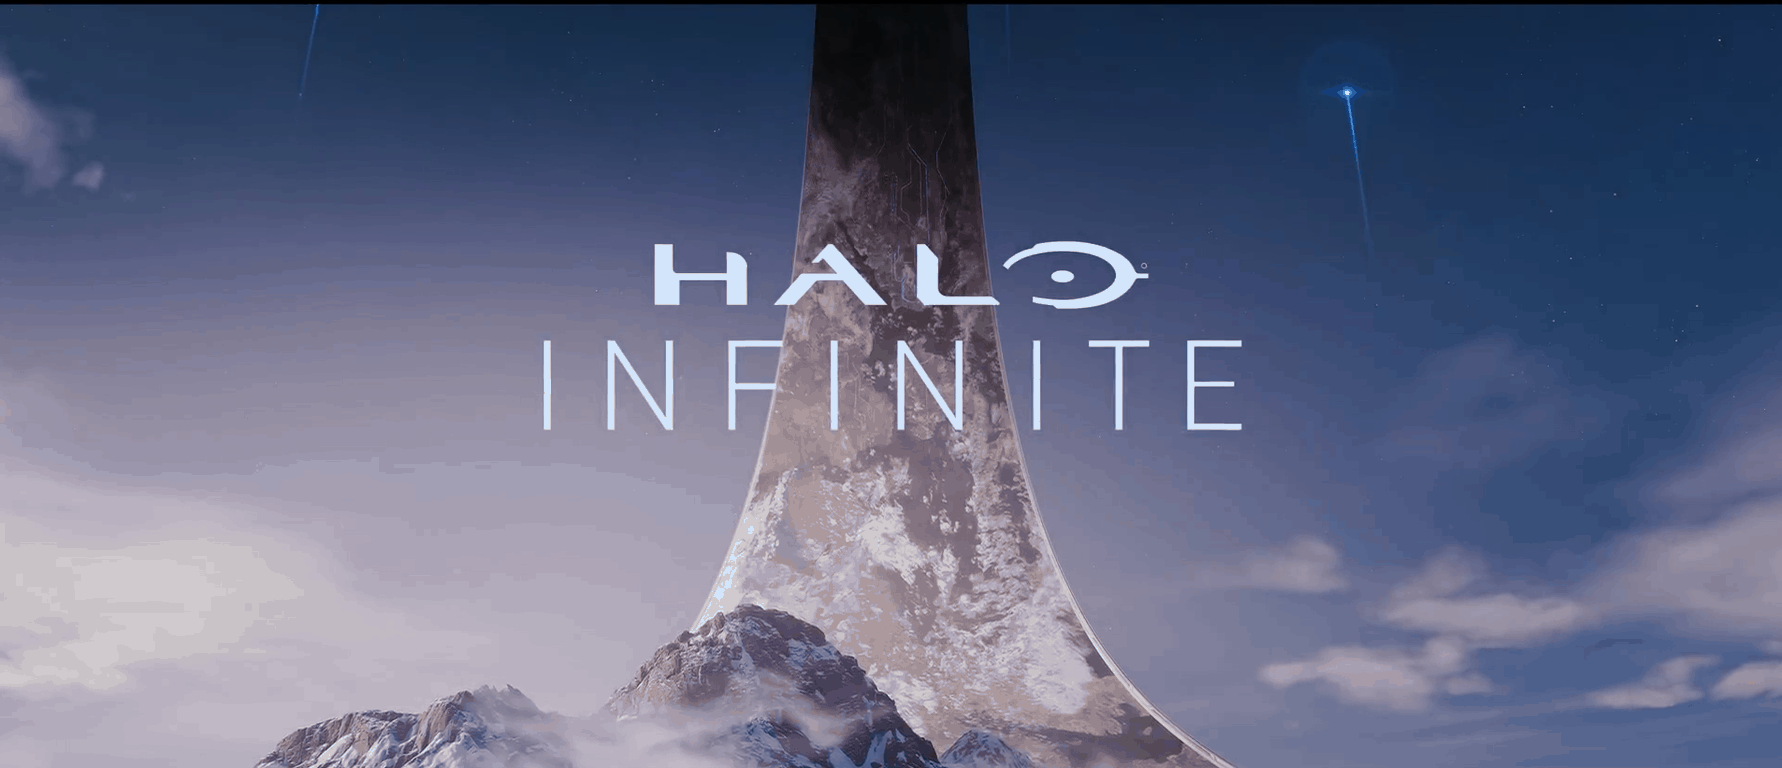 E3 2018: Microsoft kicks off its press briefing with Halo: Infinite - OnMSFT.com - June 10, 2018